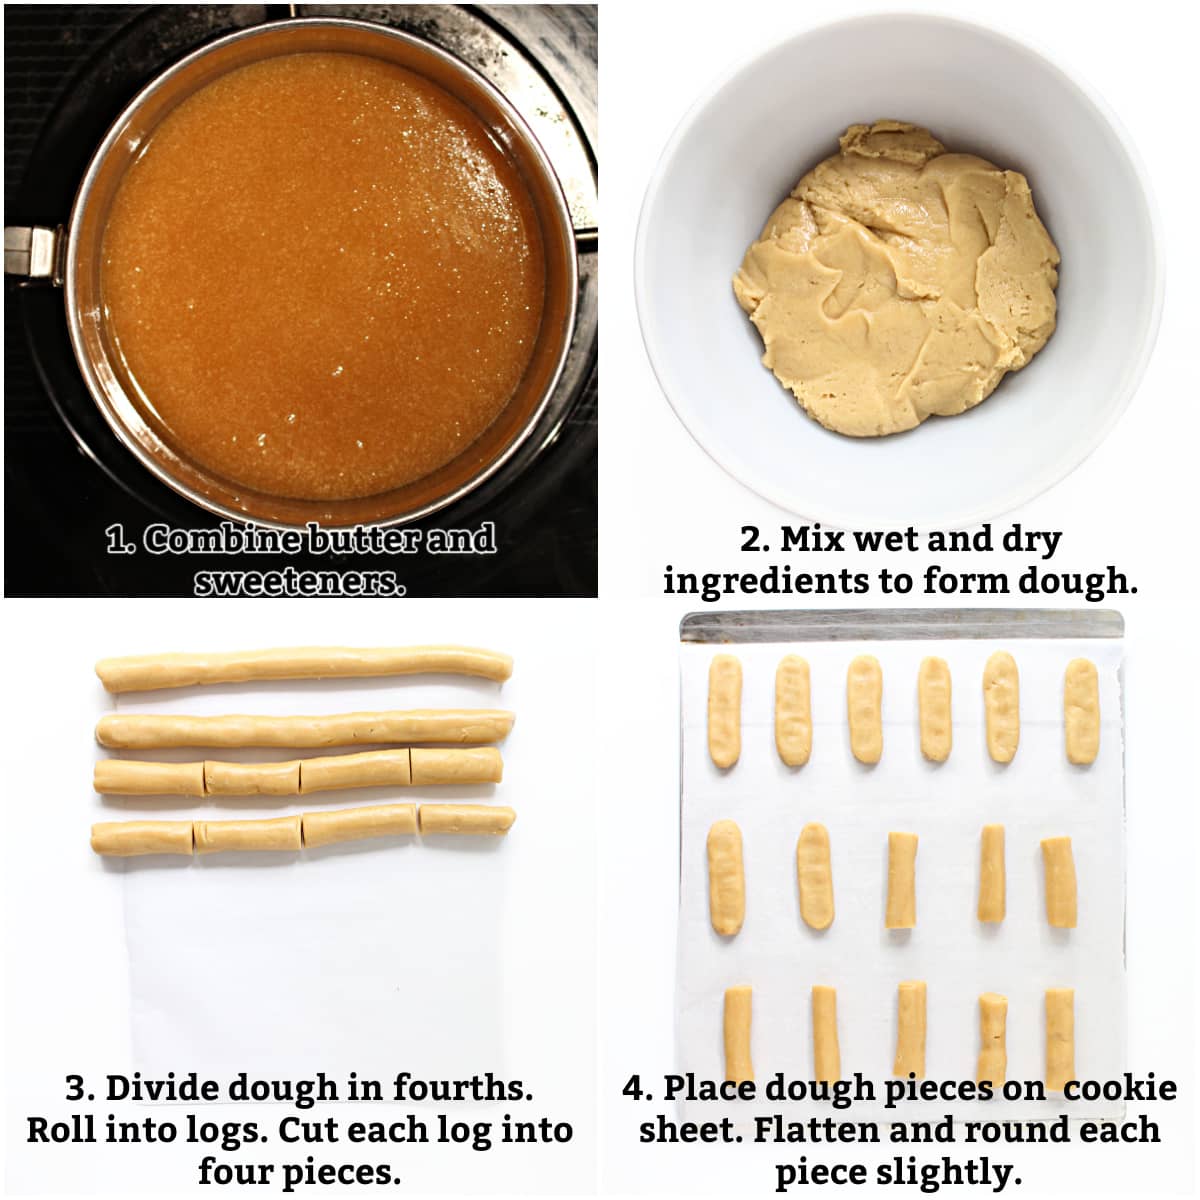 Instructions: melt butter with sweeteners, form dough, divide dough into cookies, flatten on baking sheet, bake.